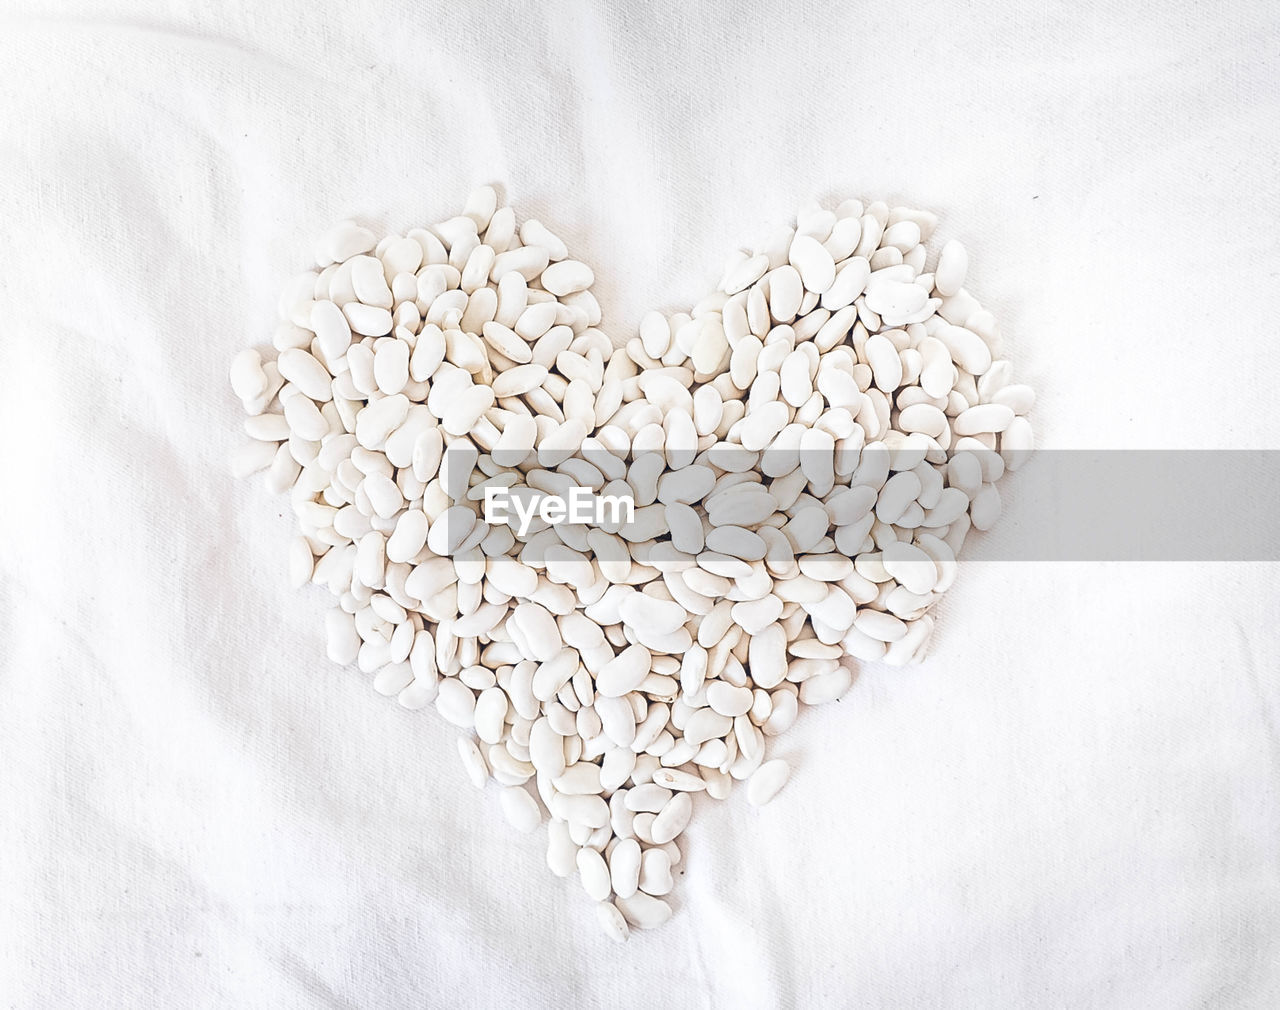 White beans in a heart shape